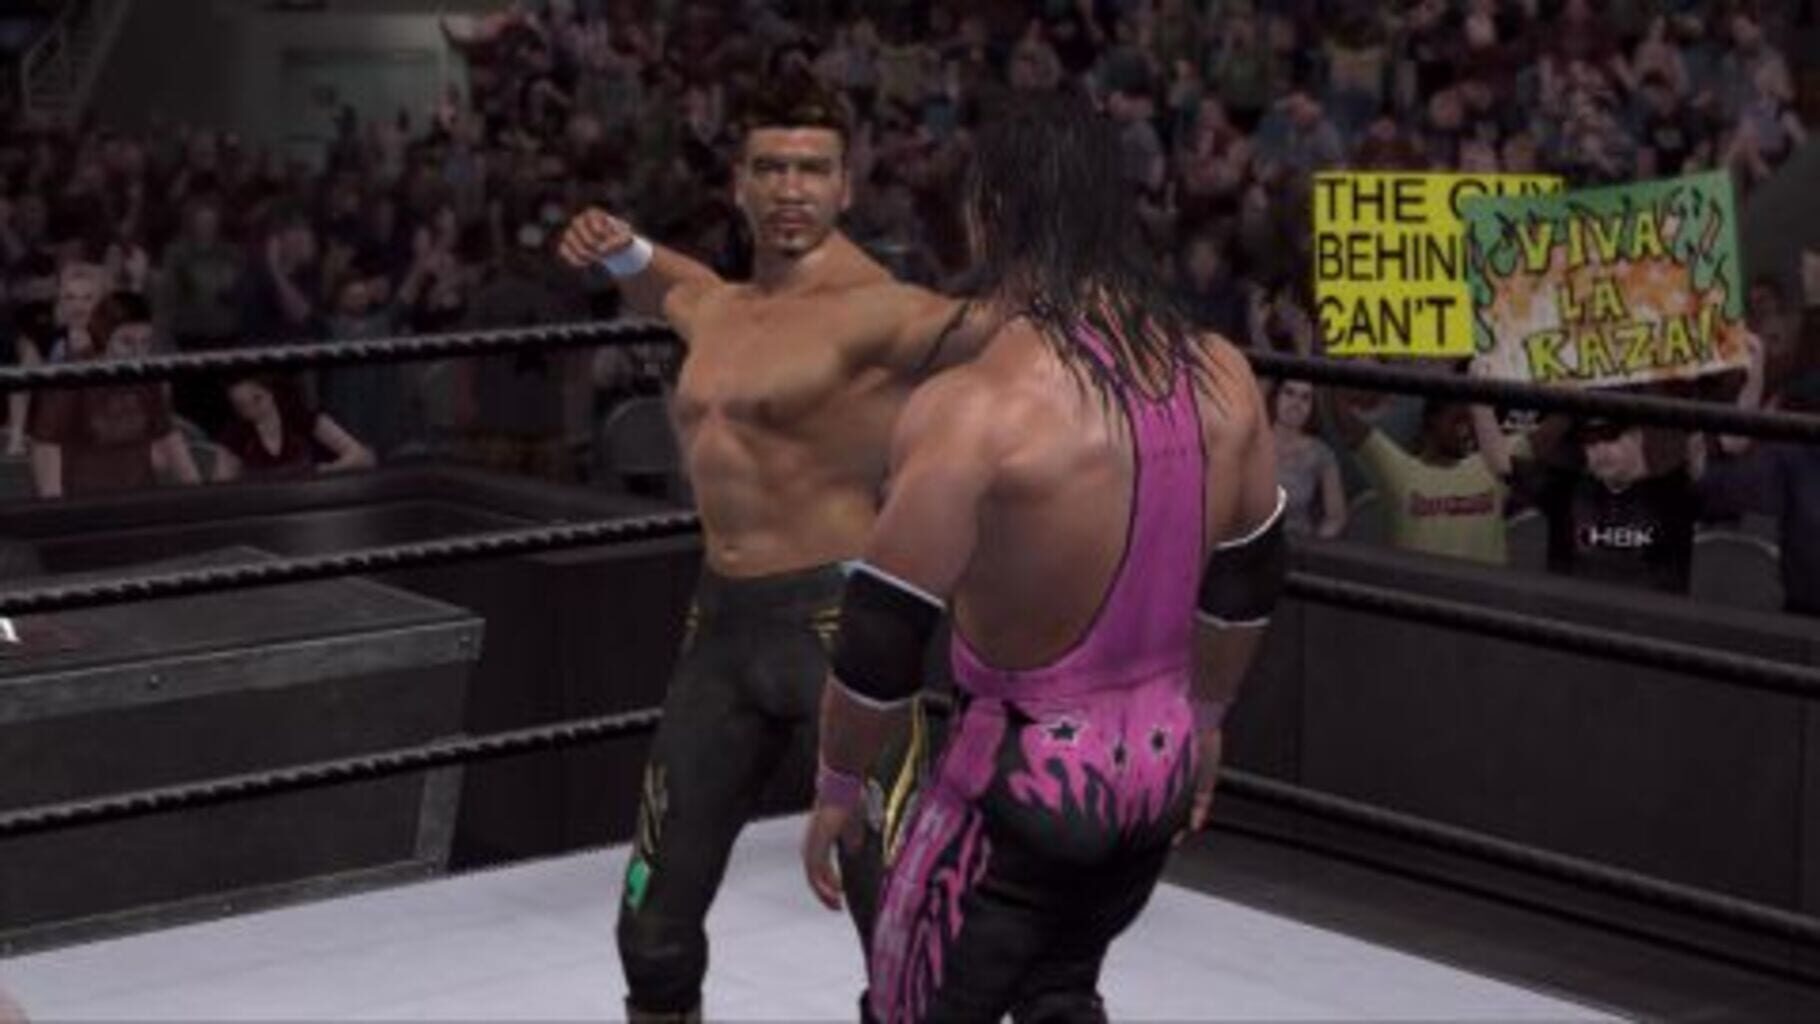 WWE SmackDown vs. Raw 2007 Image